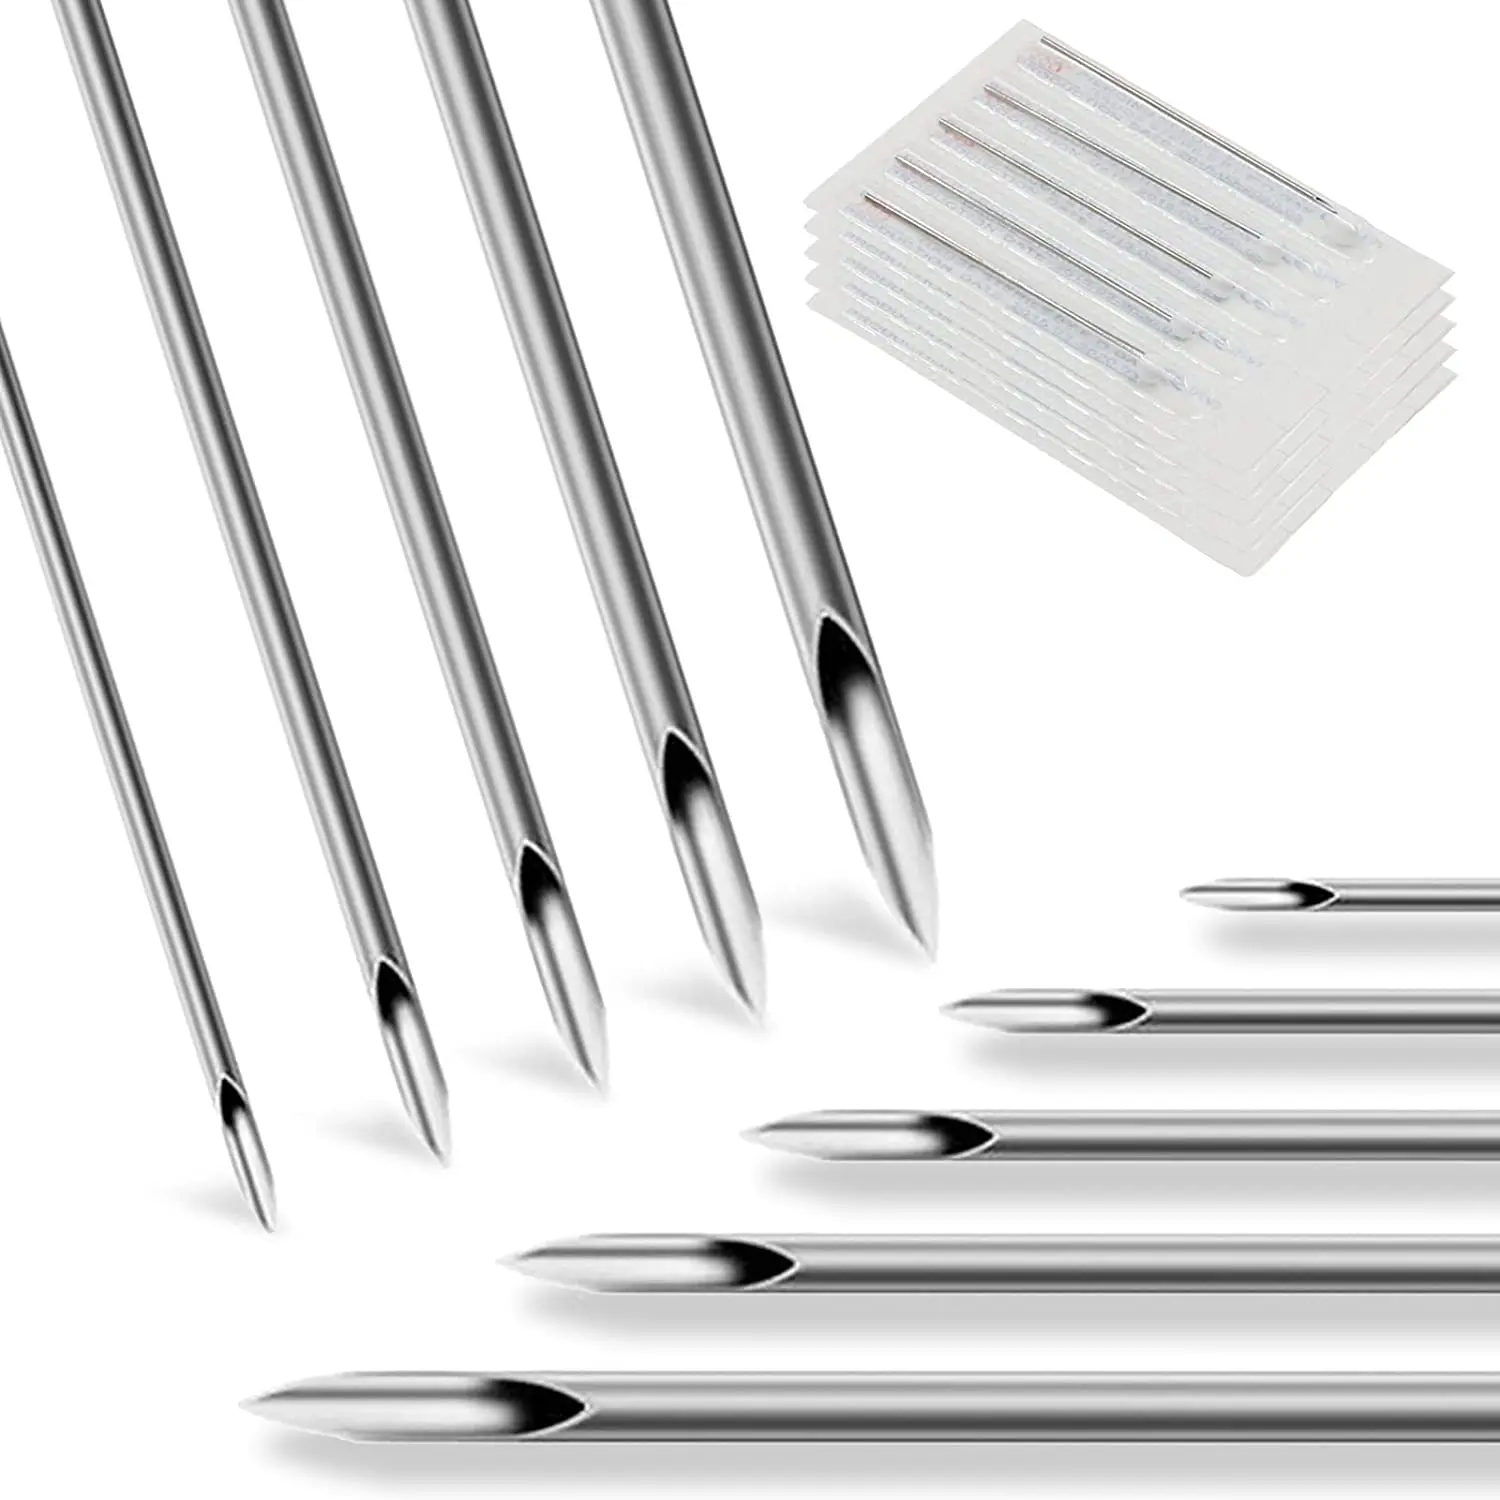 

Sdotter 100pcs Body Piercing Needles Stainless Steel Hollow Needles Including Sizes 12g 14g 16g 18g 20g for Ear Nose Navel Nippl